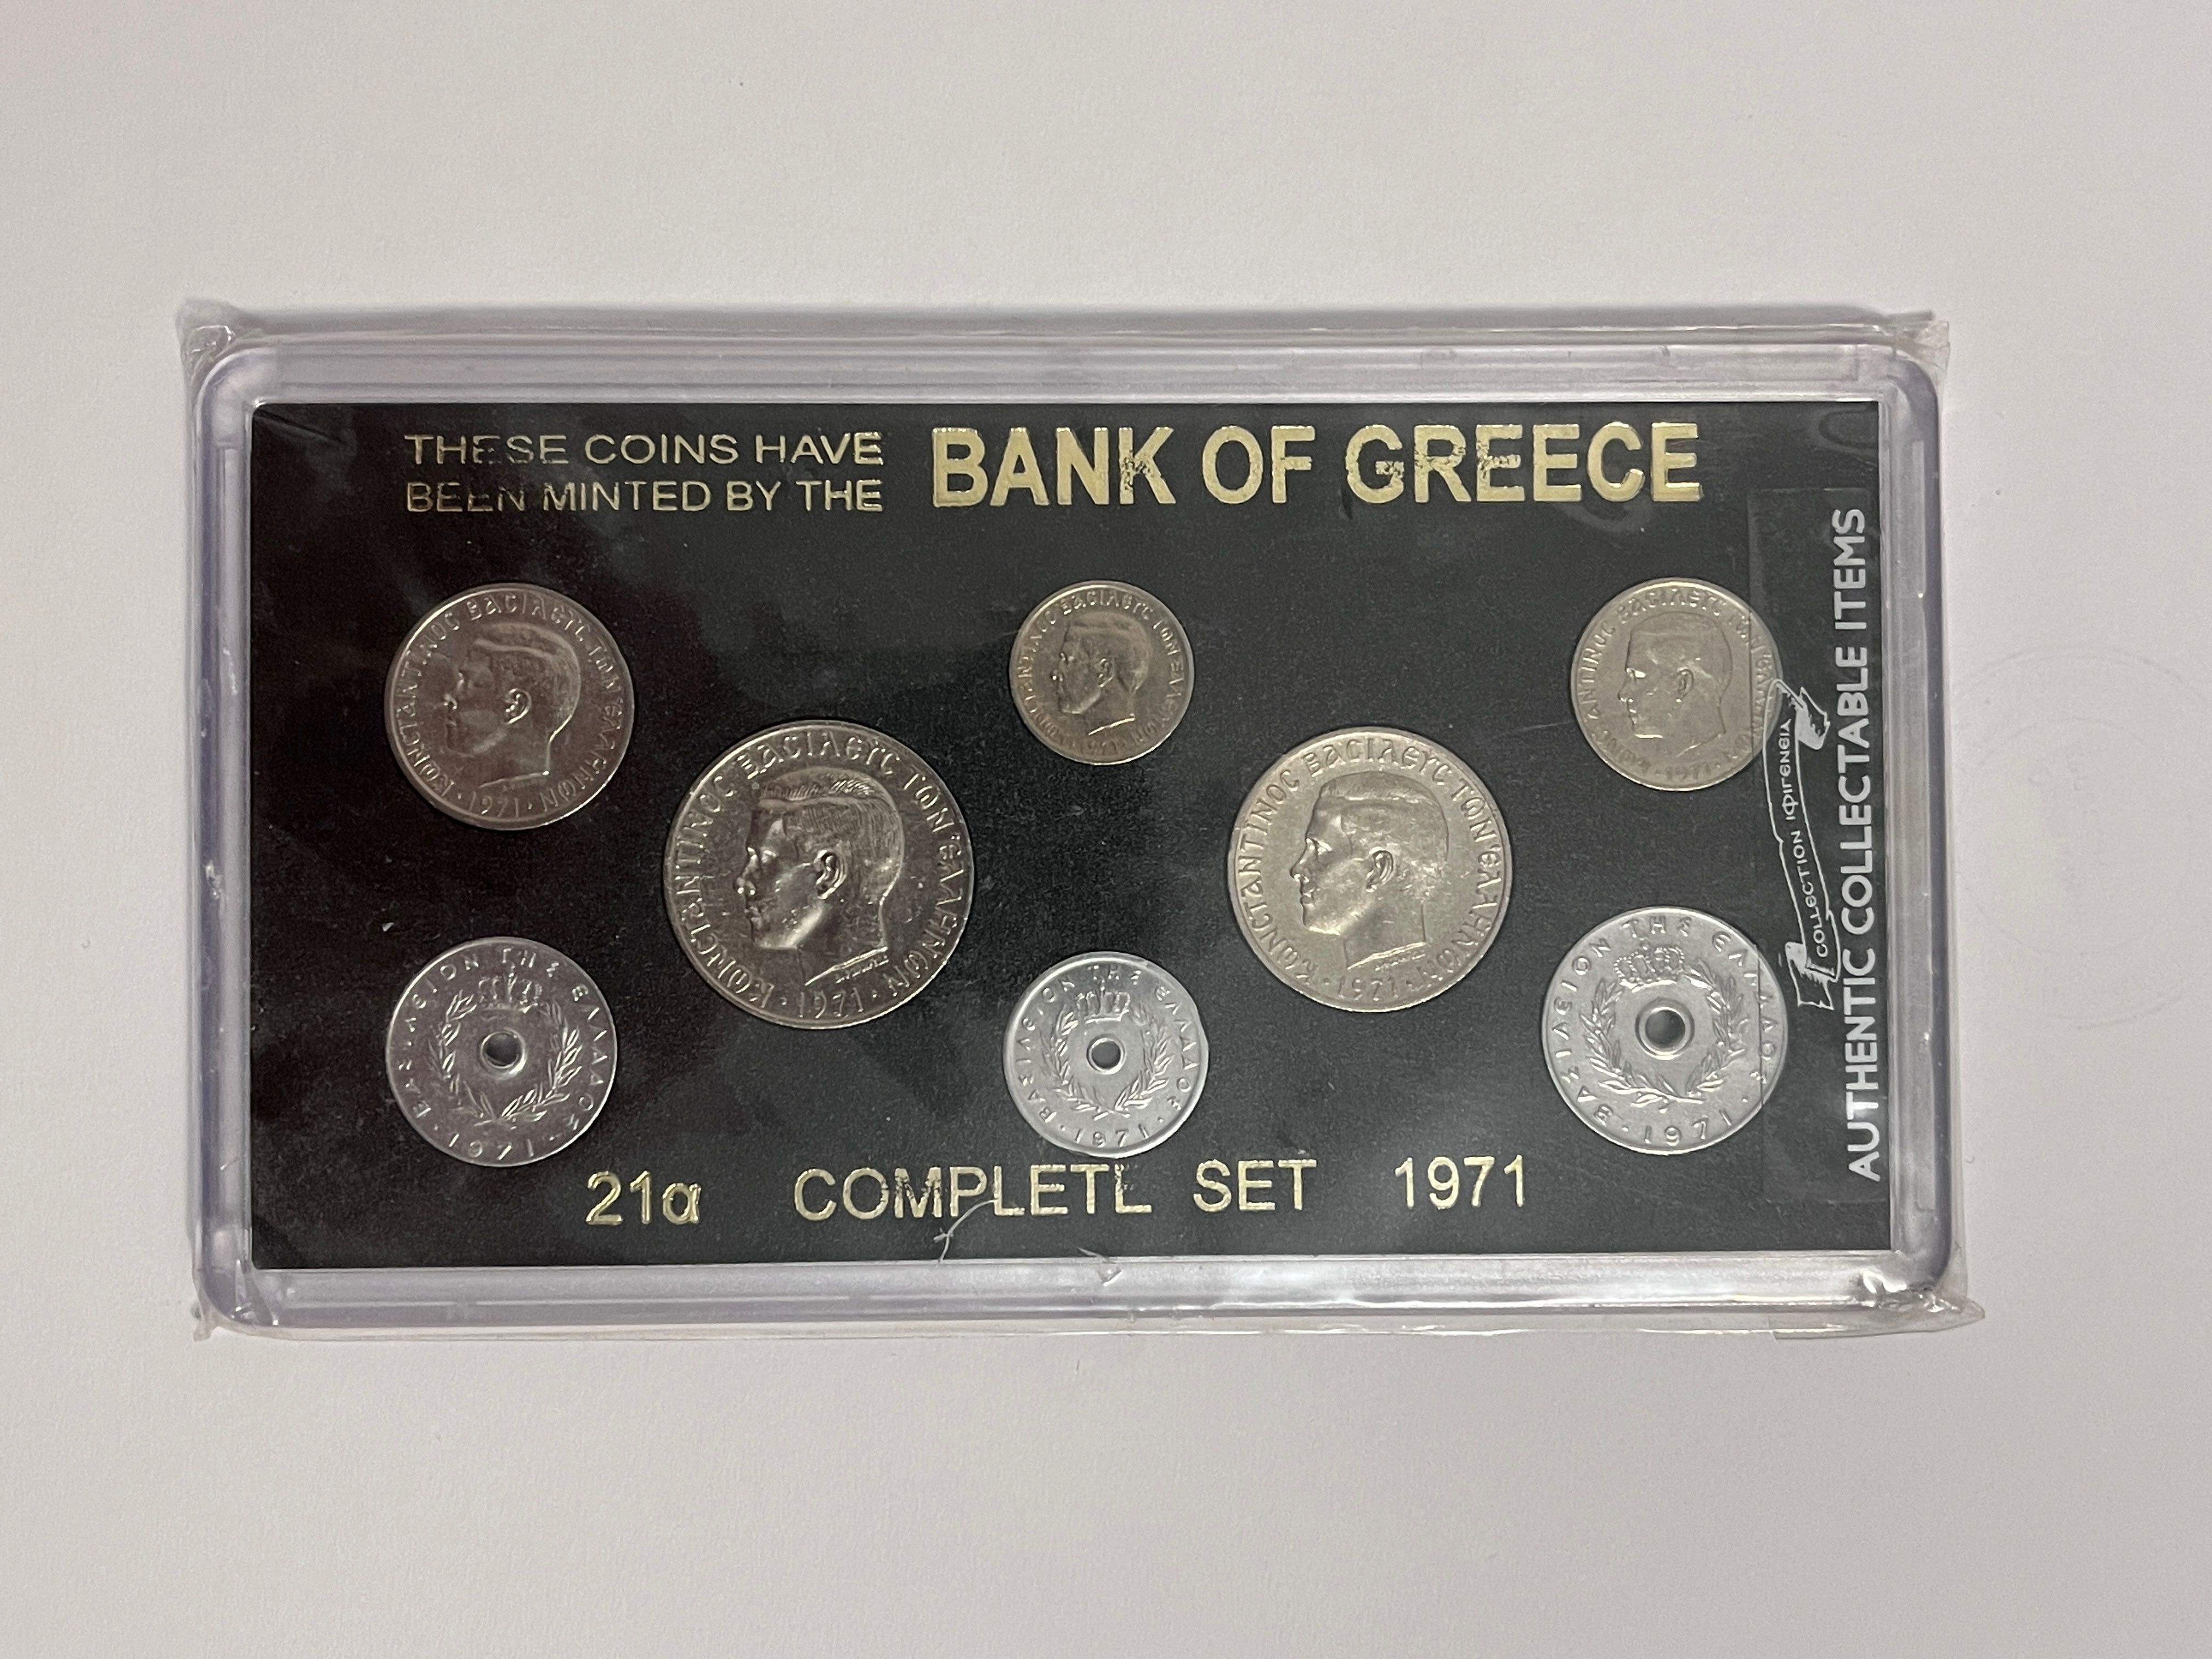 Редкий набор монет 21a Completl set 1971 Bank of Greece